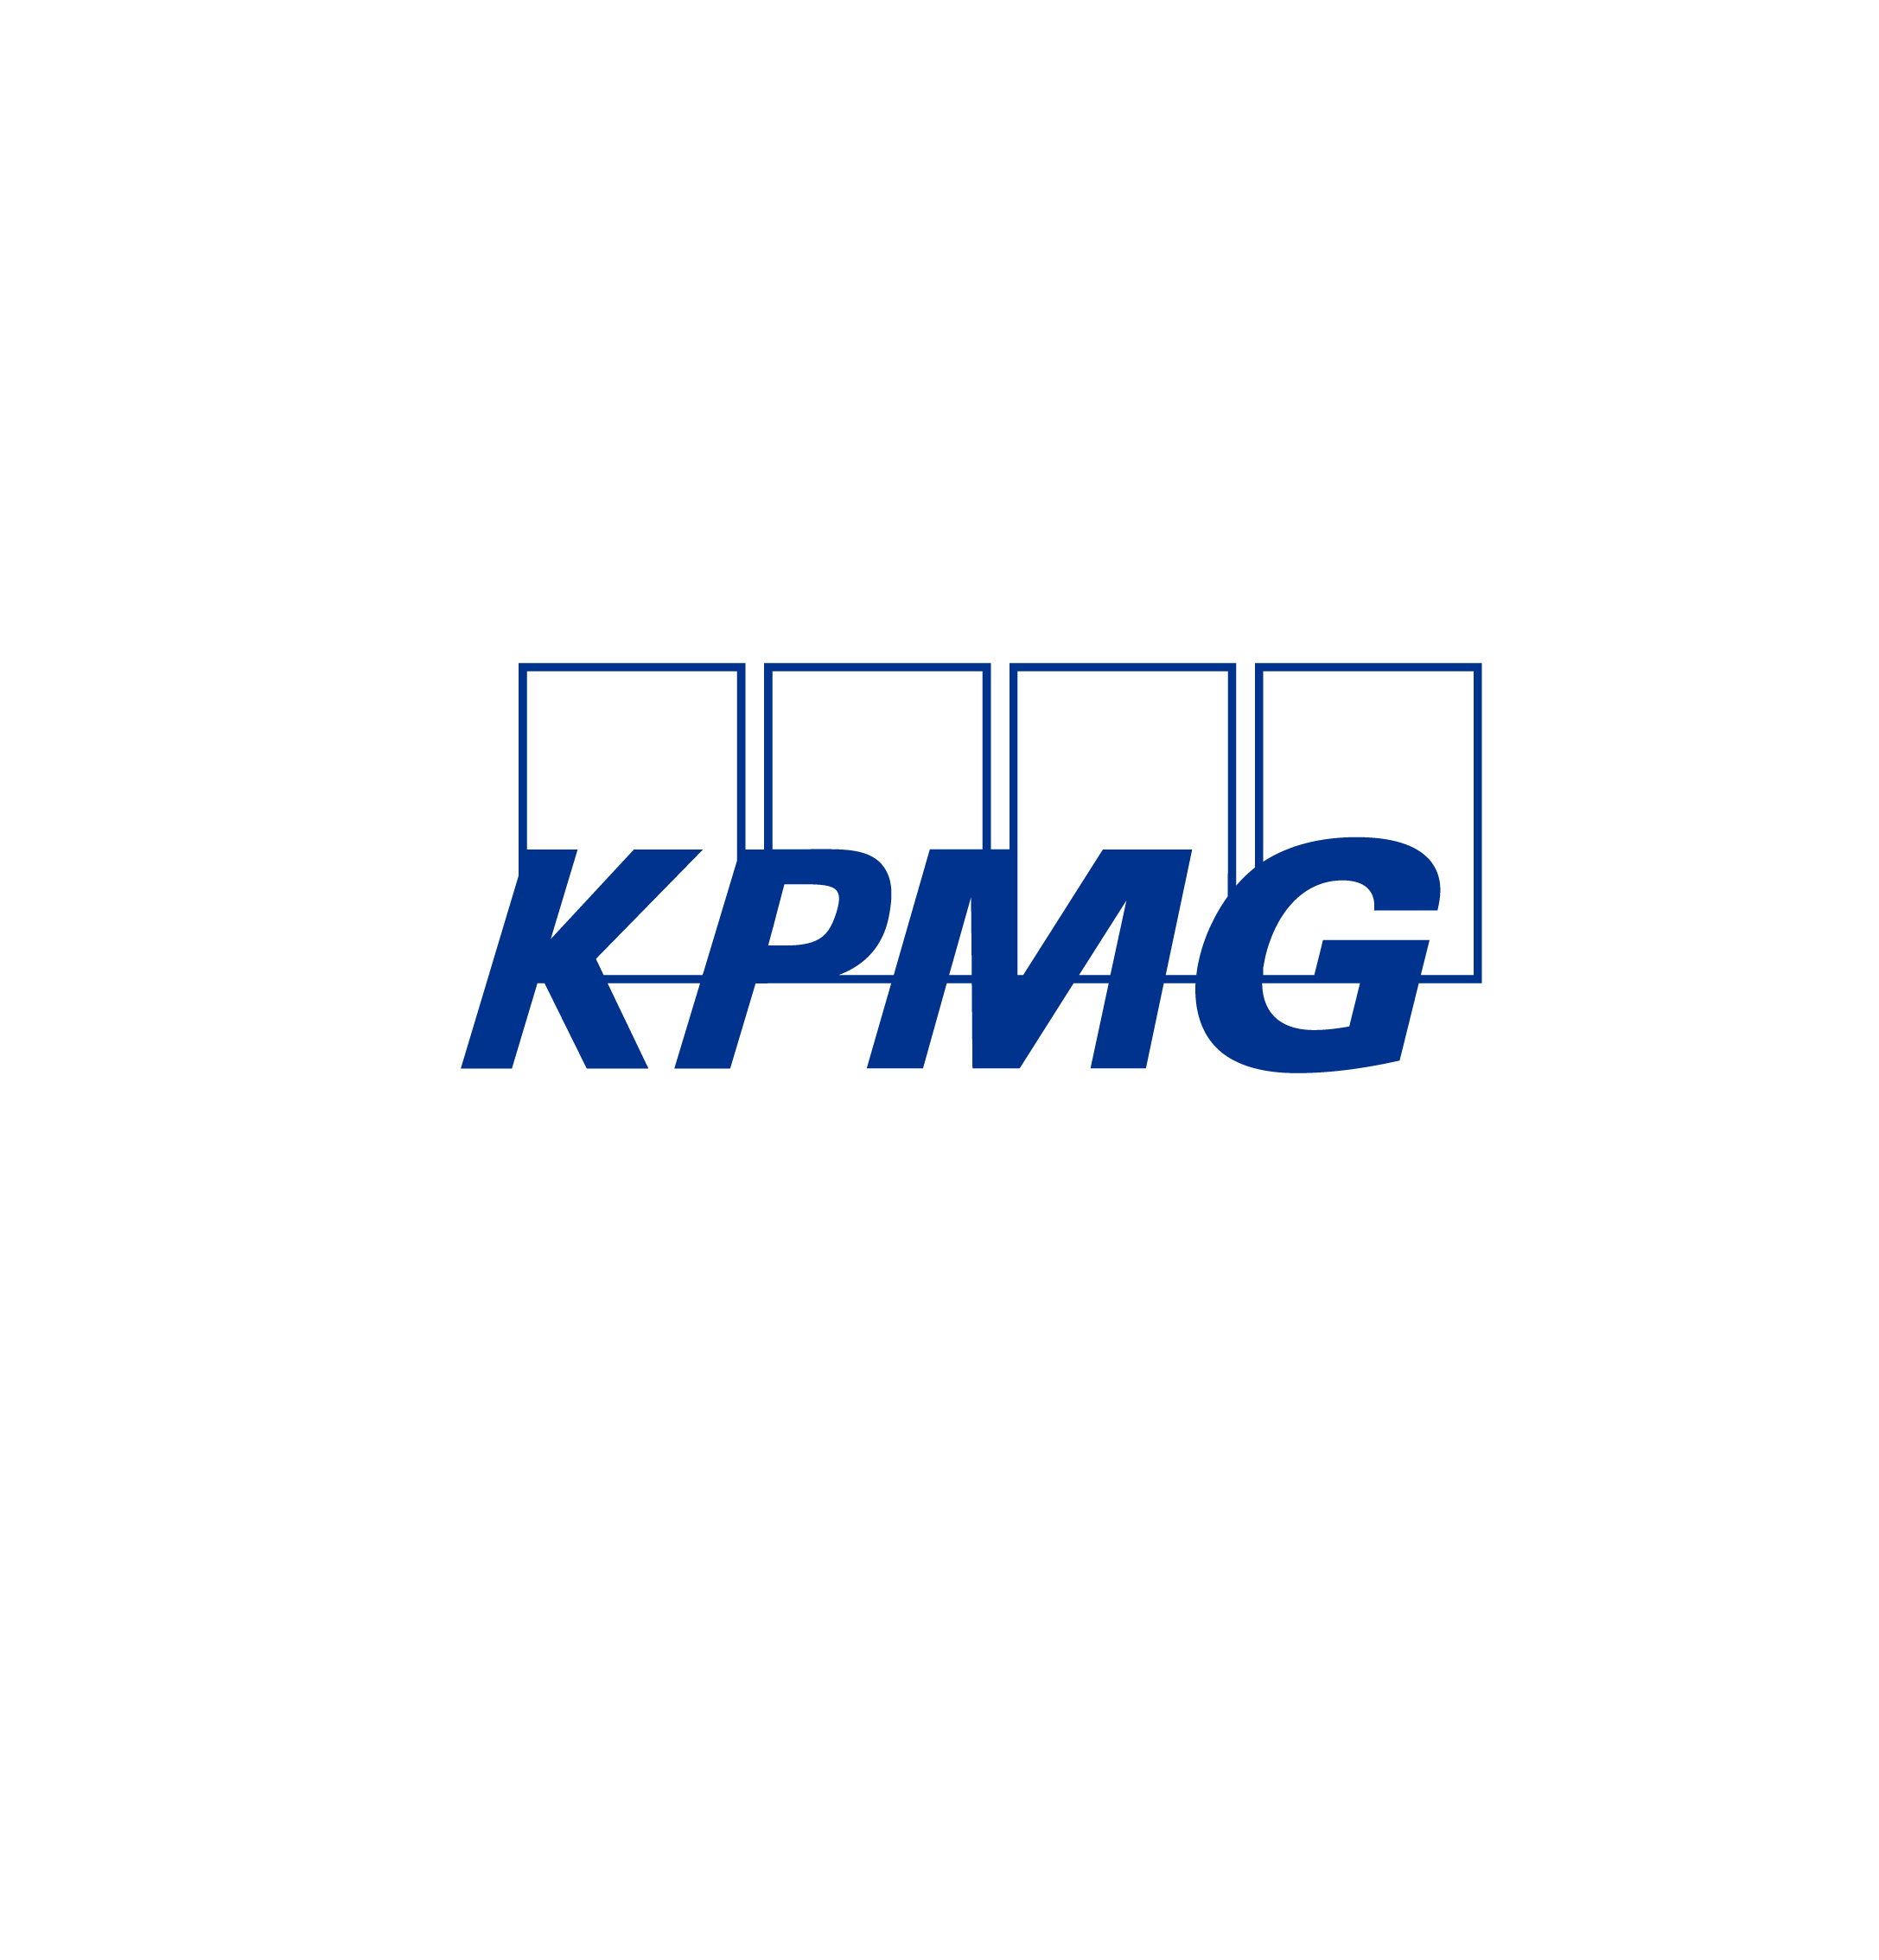 Kpmg Logo, www.imgkid.com, The Image Kid Has It! 